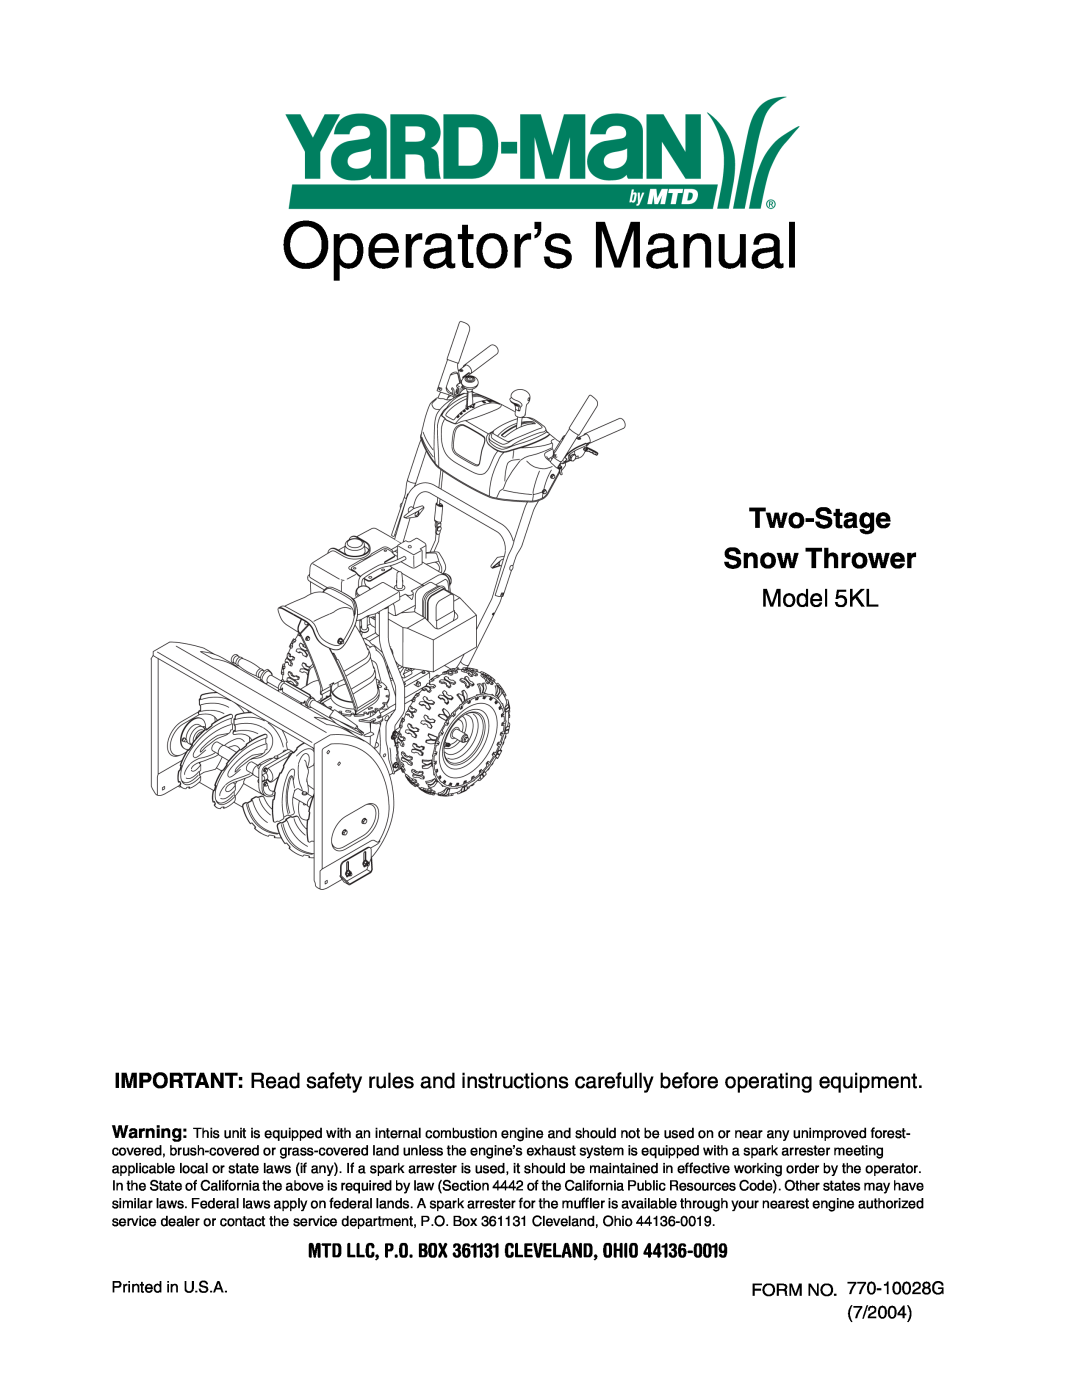 Yard-Man manual Model 5KL, MTD LLC, P.O. BOX 361131 CLEVELAND, OHIO, Operator’s Manual, Two-Stage Snow Thrower 